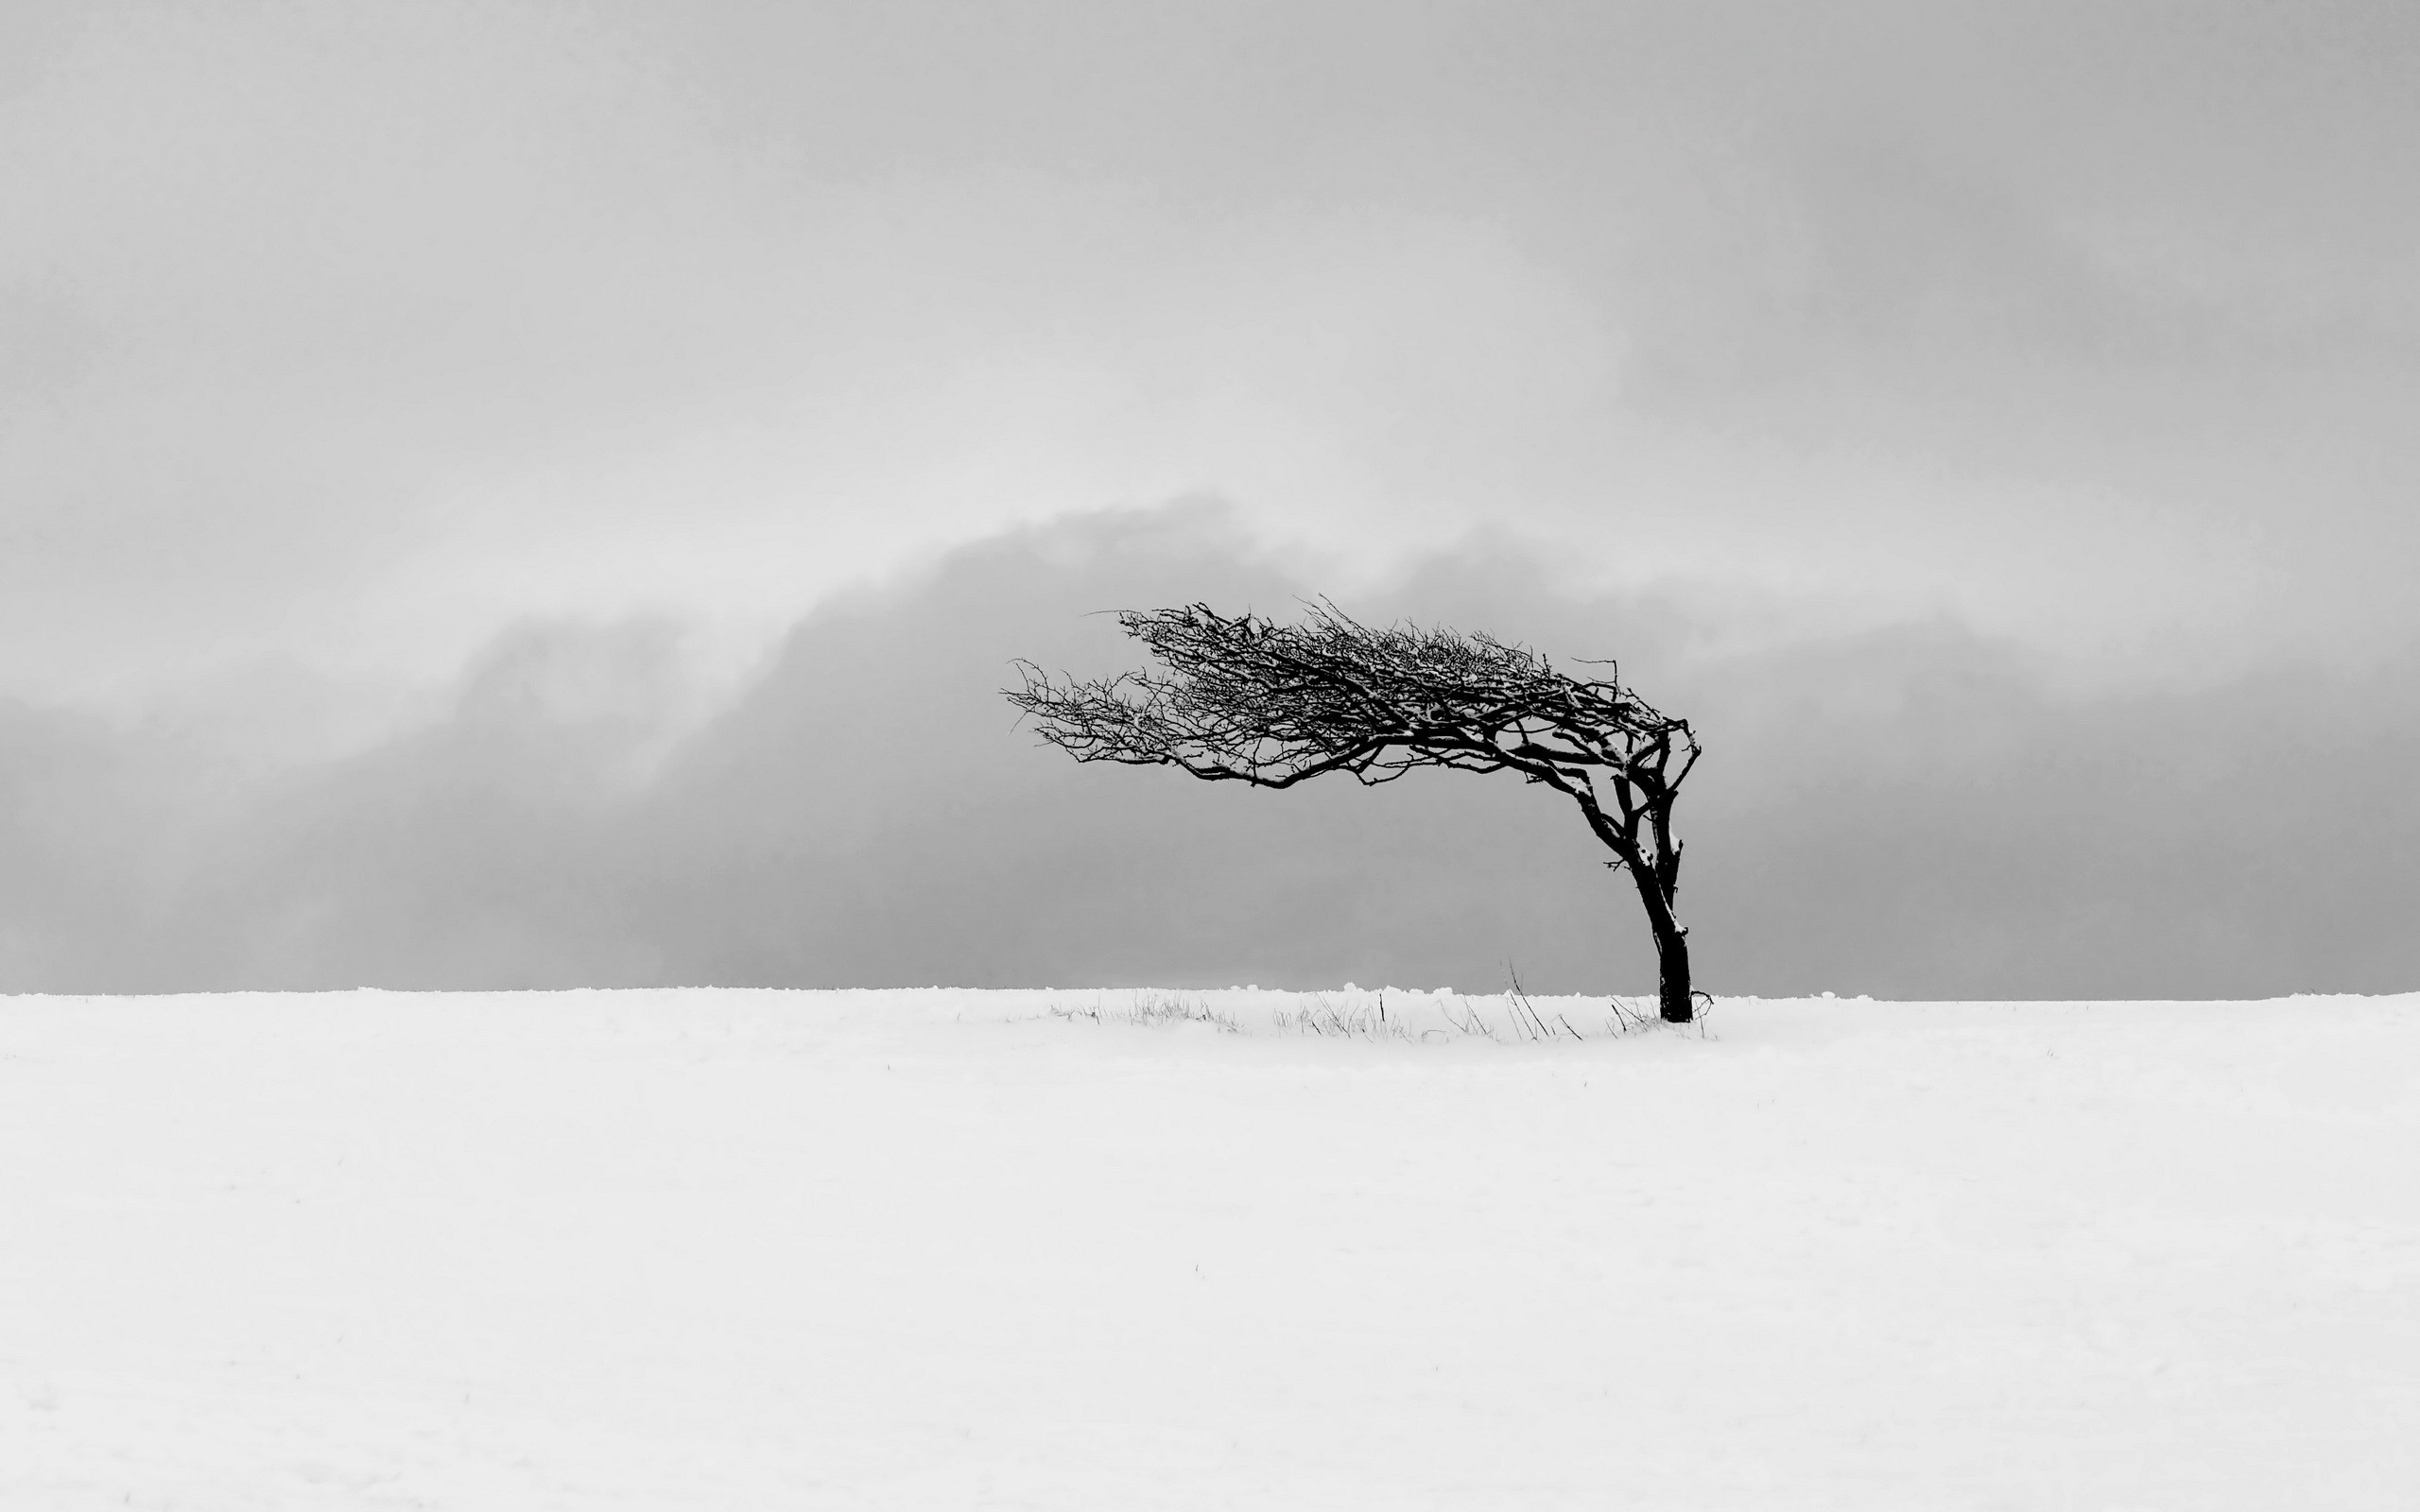 General 2560x1600 nature trees winter snow monochrome minimalism mist white cold frost ice landscape